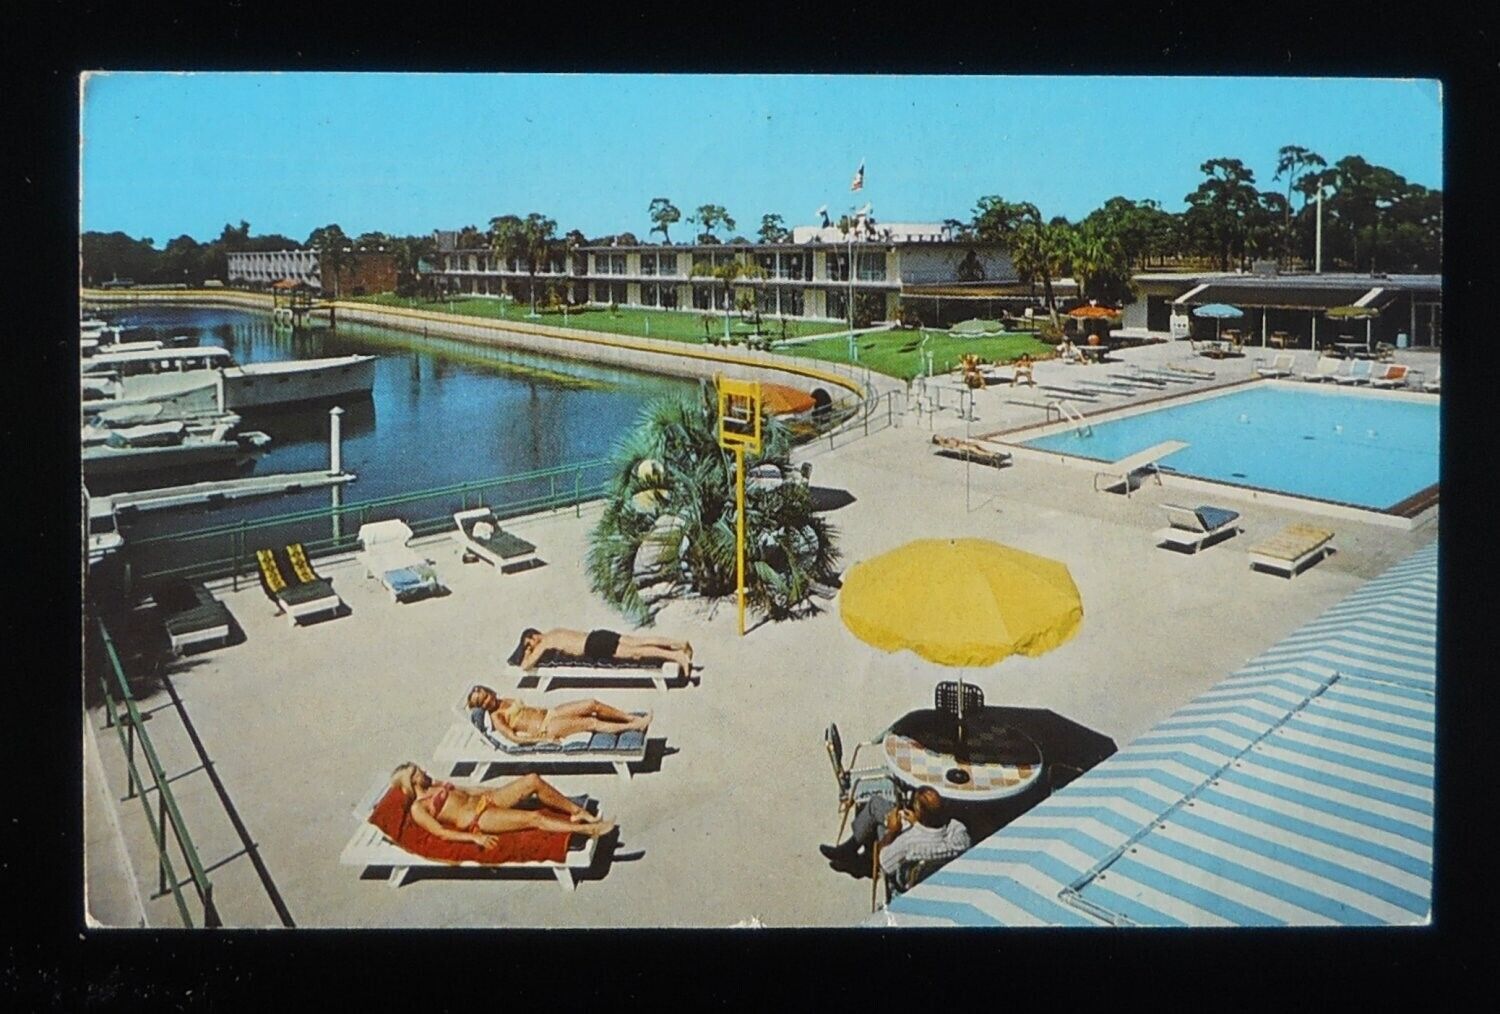 1973 Swimming Pool Holiday Inn 8221 N. Tamiami Trail Bikini Chicks Sarasota FL